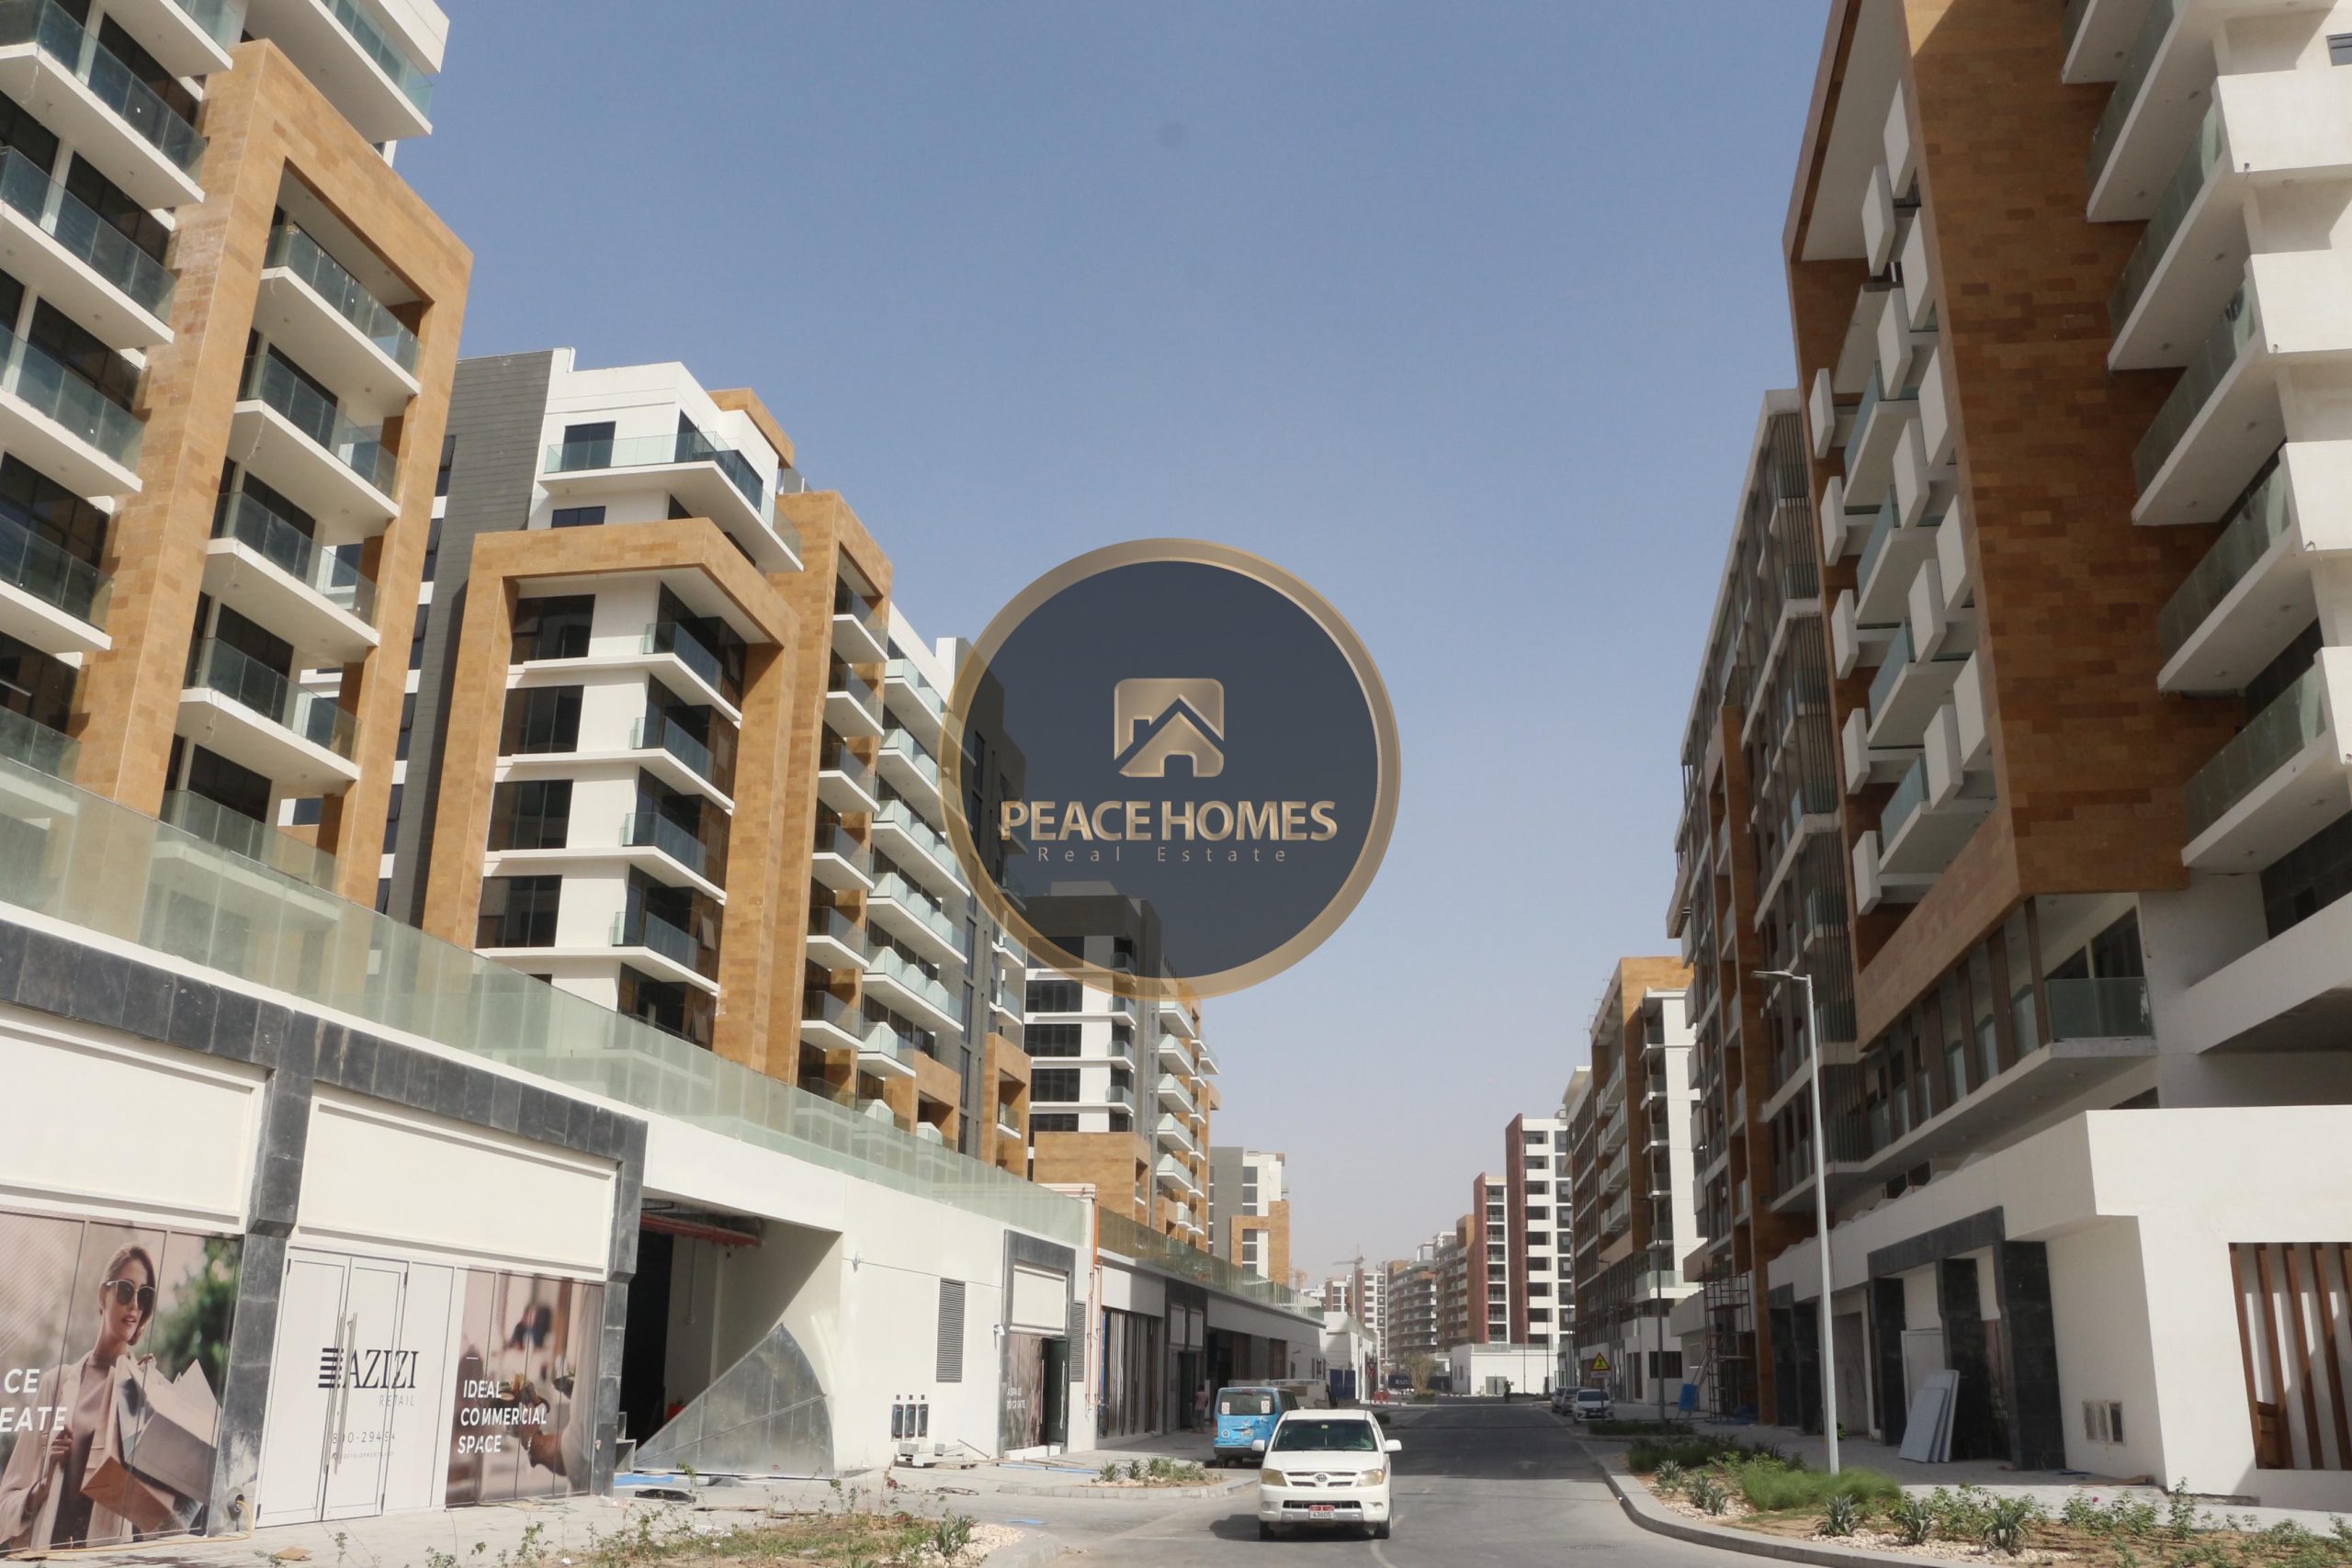 Retail for sale| Price location| Al maydan